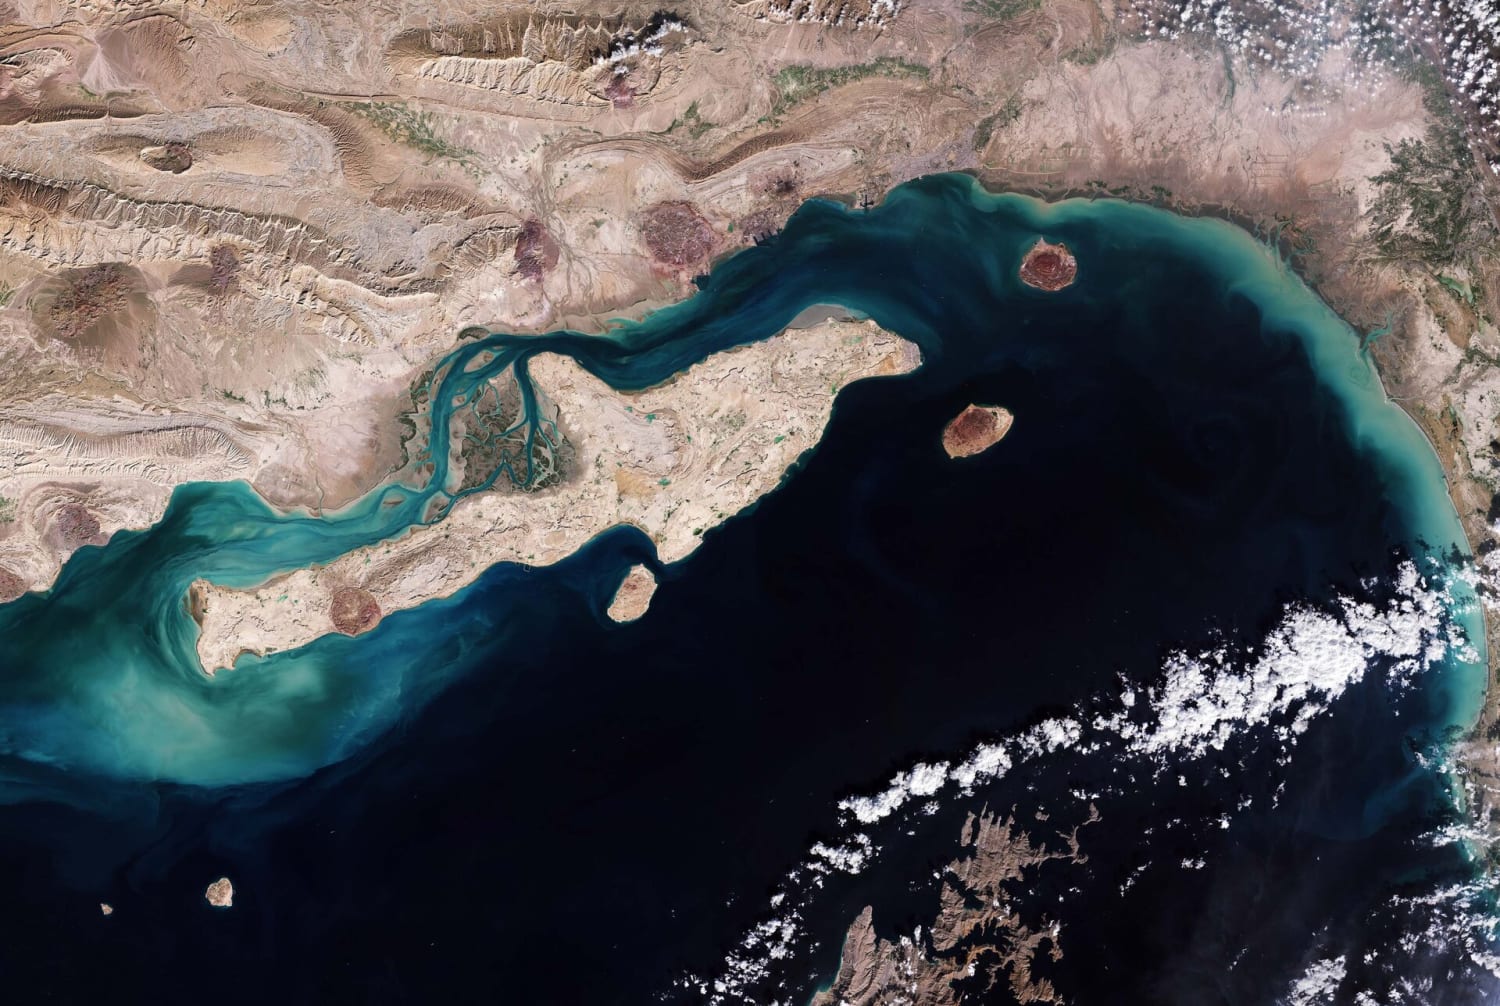 Earth from Space: Qeshm Island